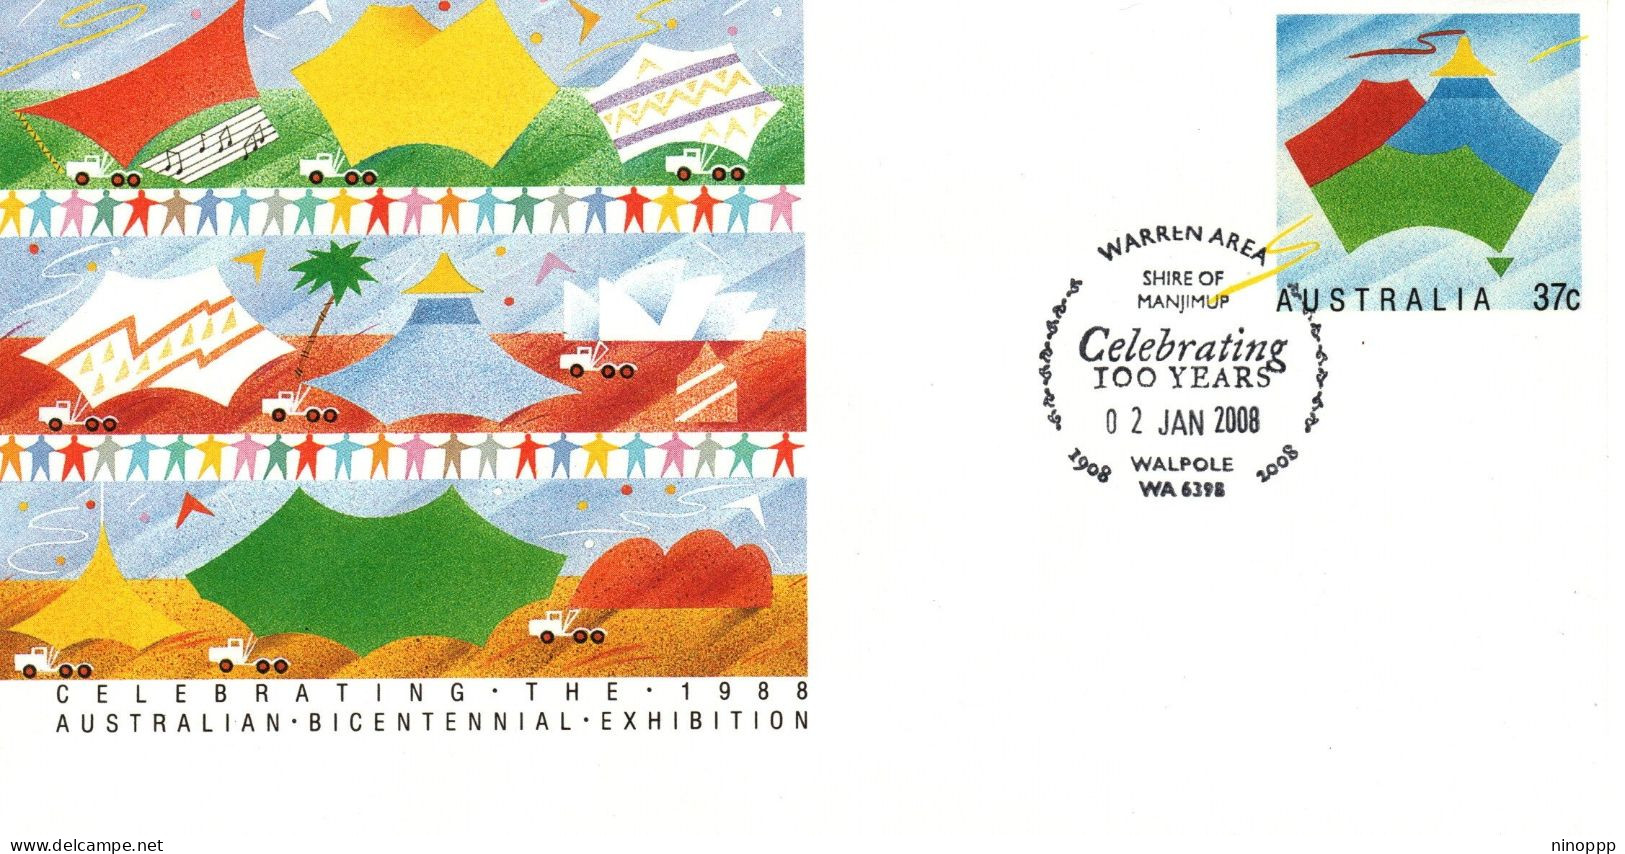 Australia 2008 ,Warren Area Celebrating 100 Years,Walpole Postmark,souvenir Cover - Marcophilie